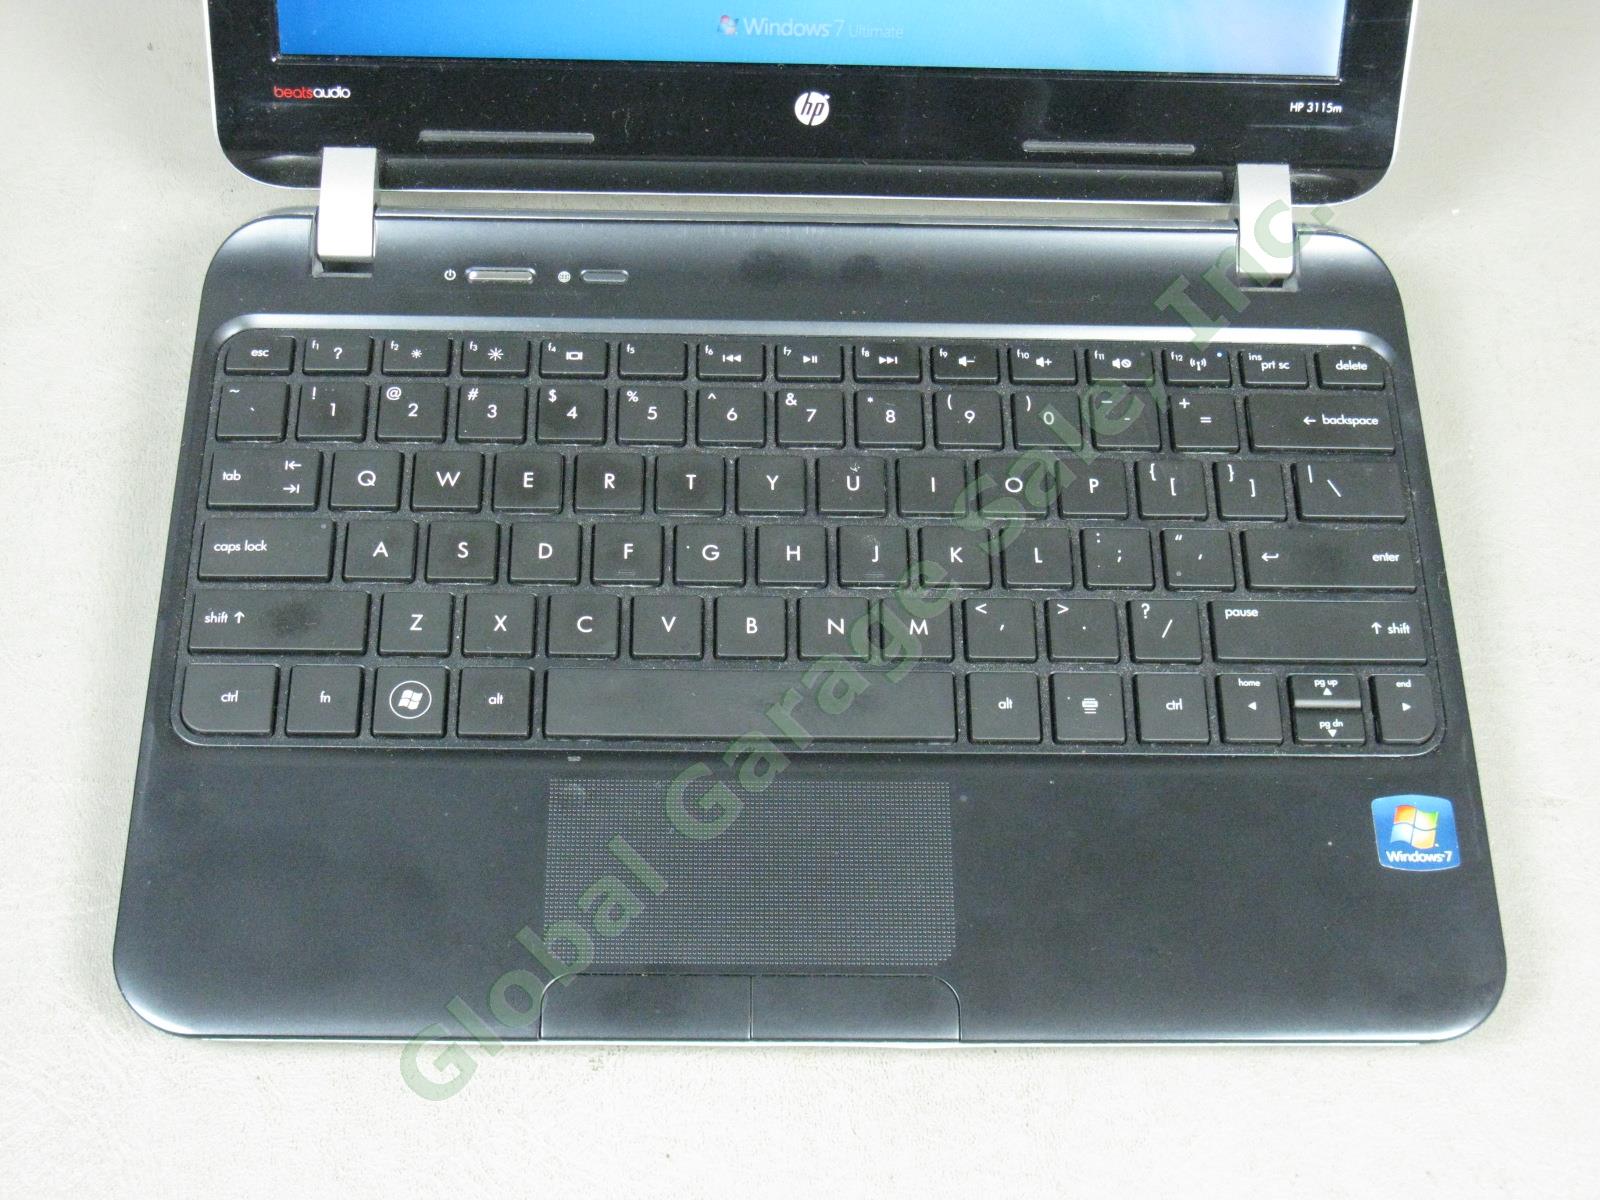 HP 3115m 11.6" Notebook Laptop 1.65GHz 4GB 320GB Windows 7 Ultimate Beats Audio 1